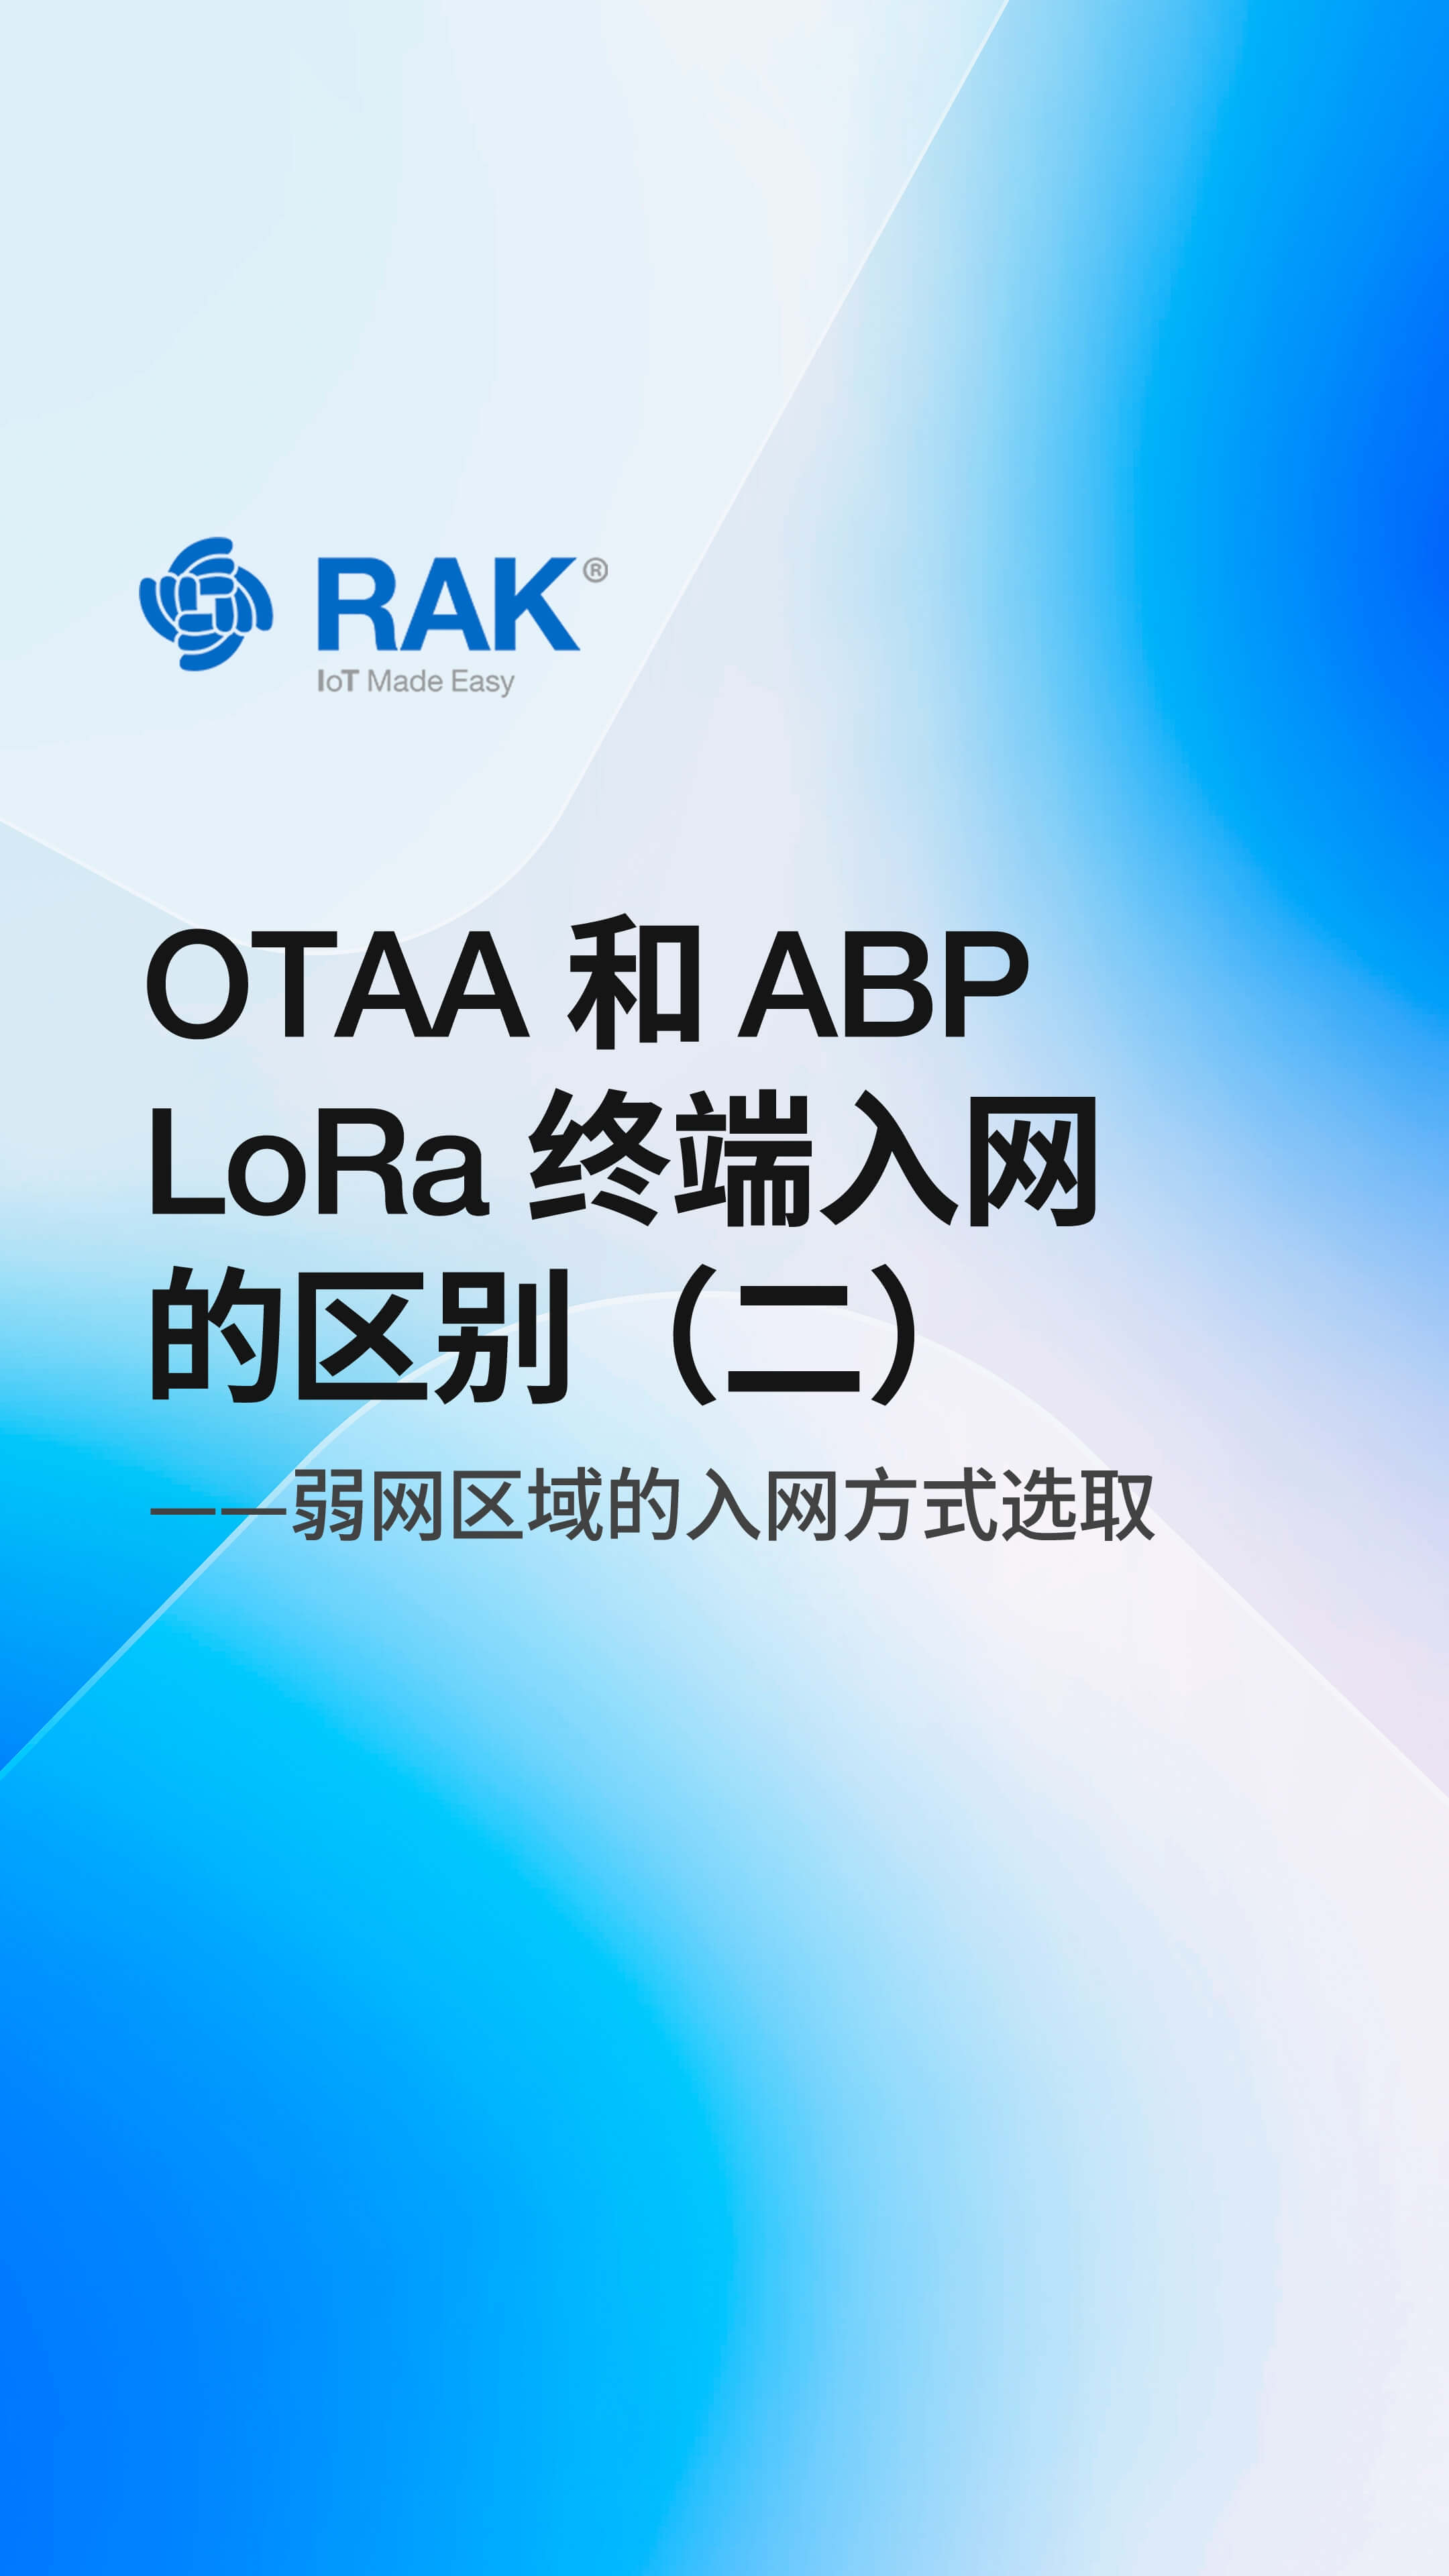 LoRa®终端入网方式OTAA与ABP的区别：弱网区域的入网方式选取#LoRa终端 #入网方式  #瑞科慧联 